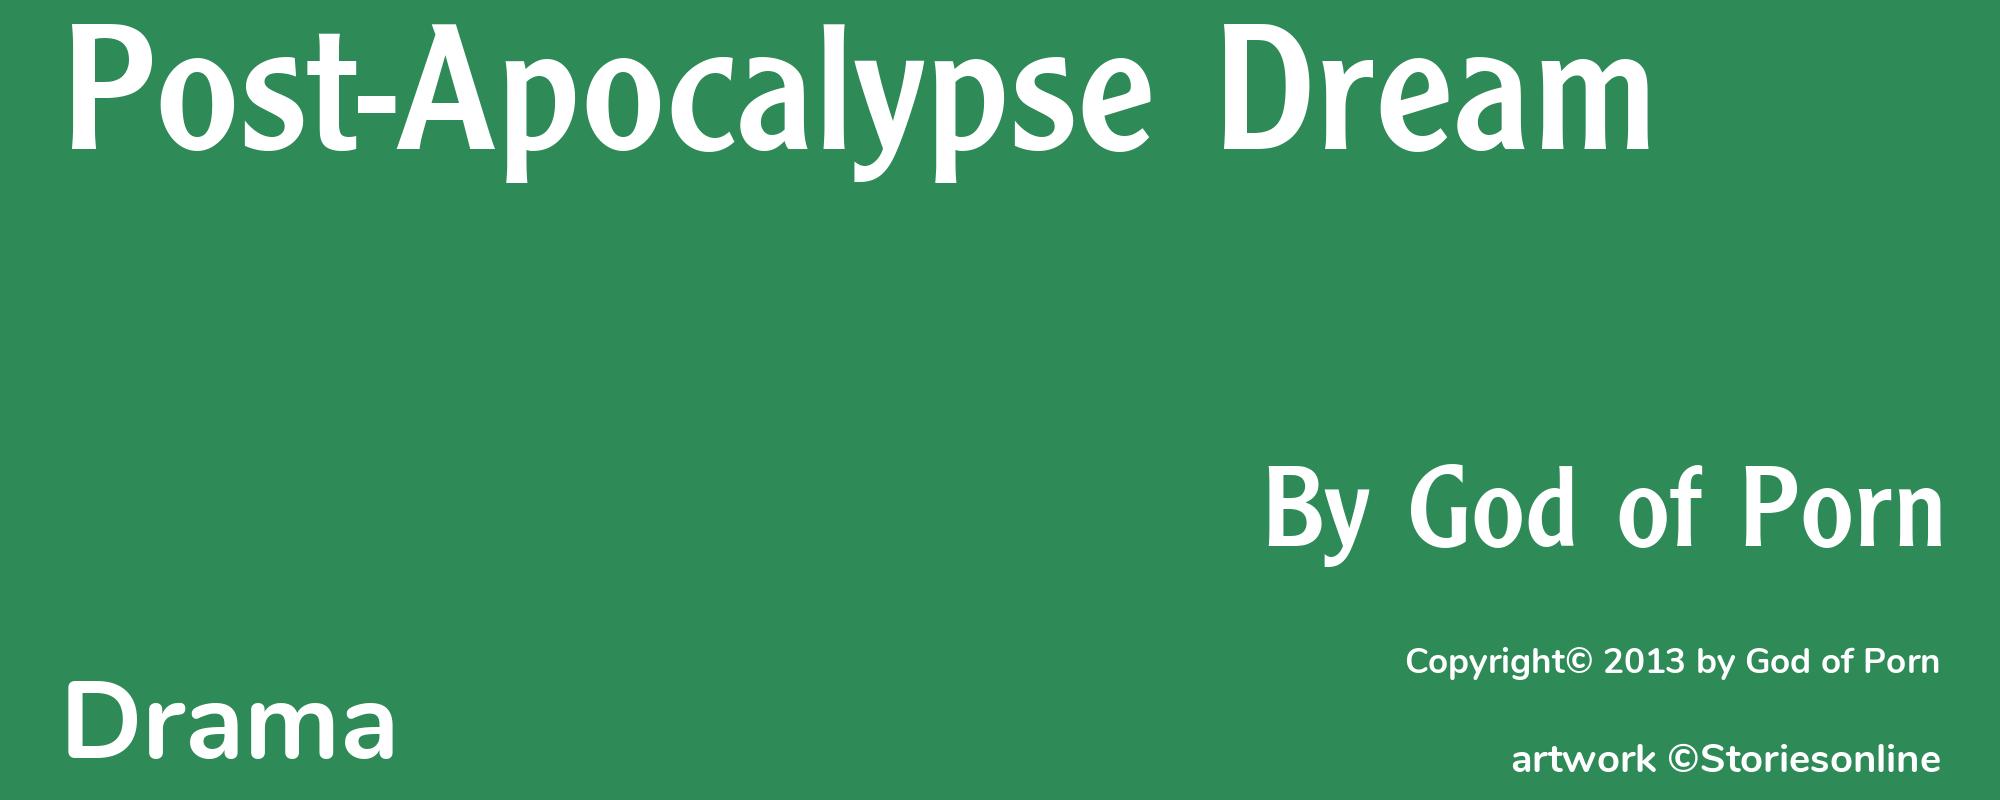 Post-Apocalypse Dream - Cover